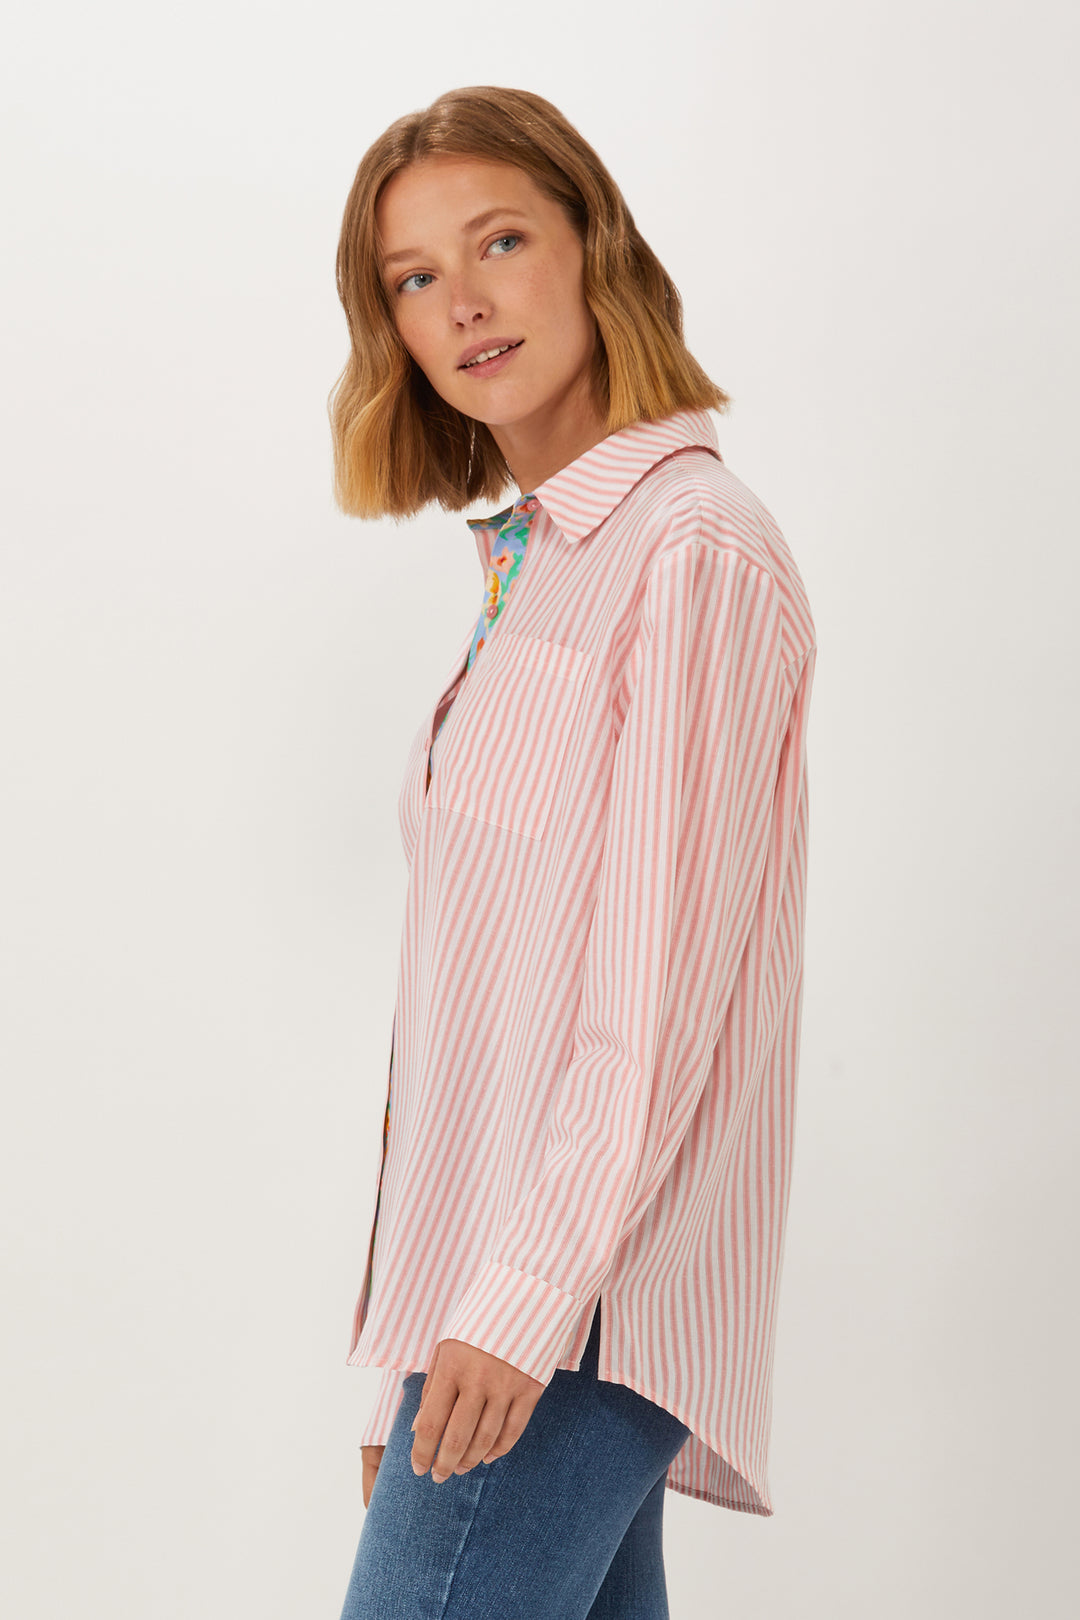 Lawrence Oversize Shirt - Soft Coral Stripe